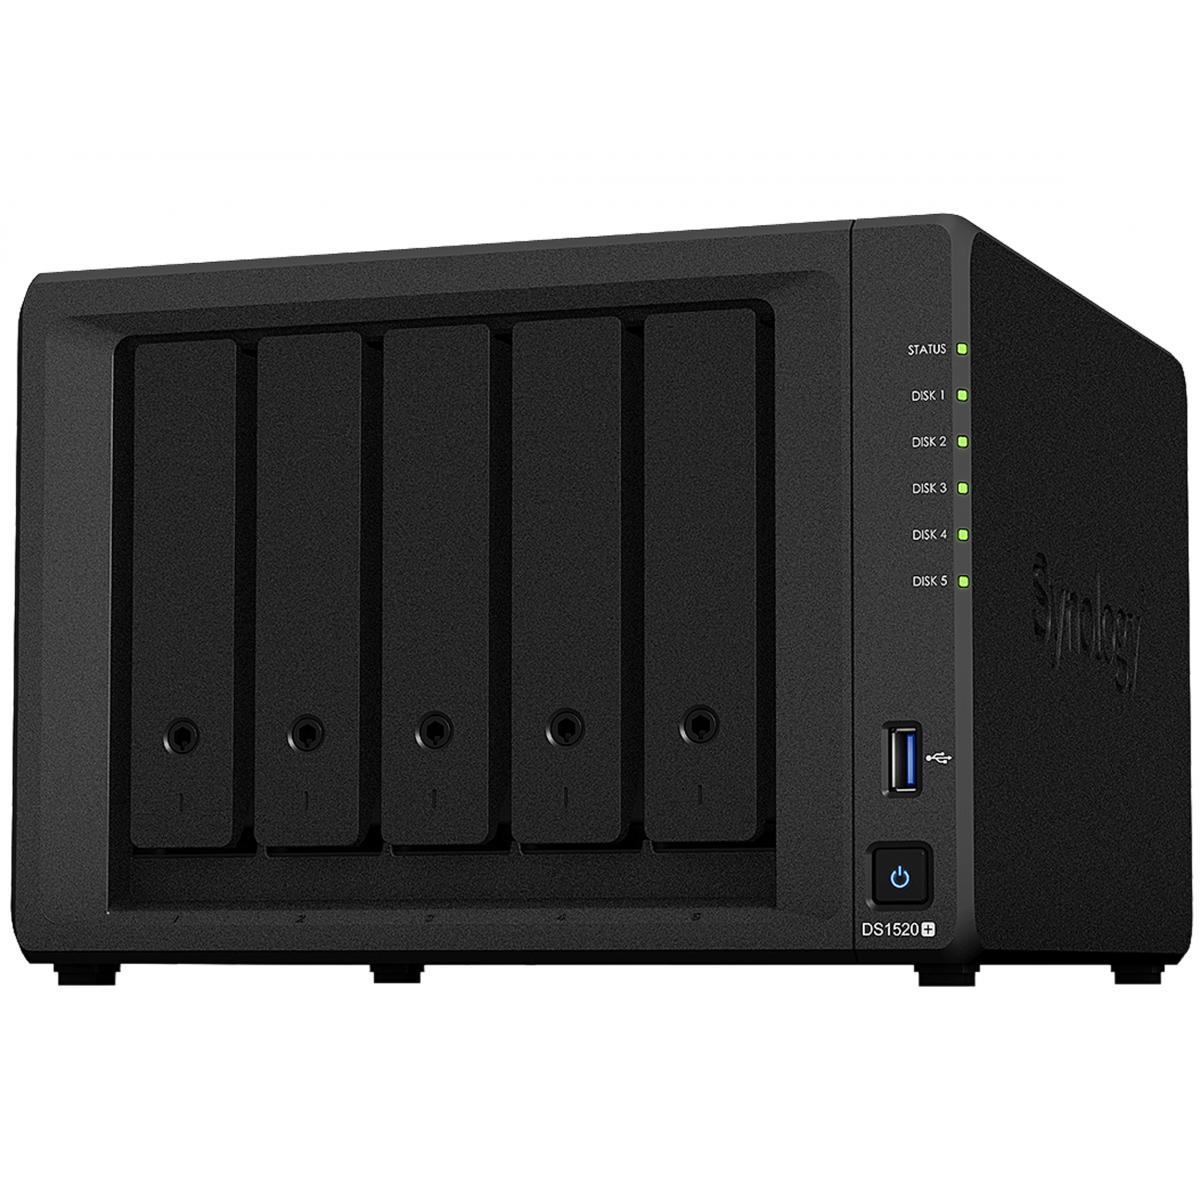 Synology DiskStation DS1522+ 5-Bay NAS Storage Enclosure Versatile Data Hub For Home & Office